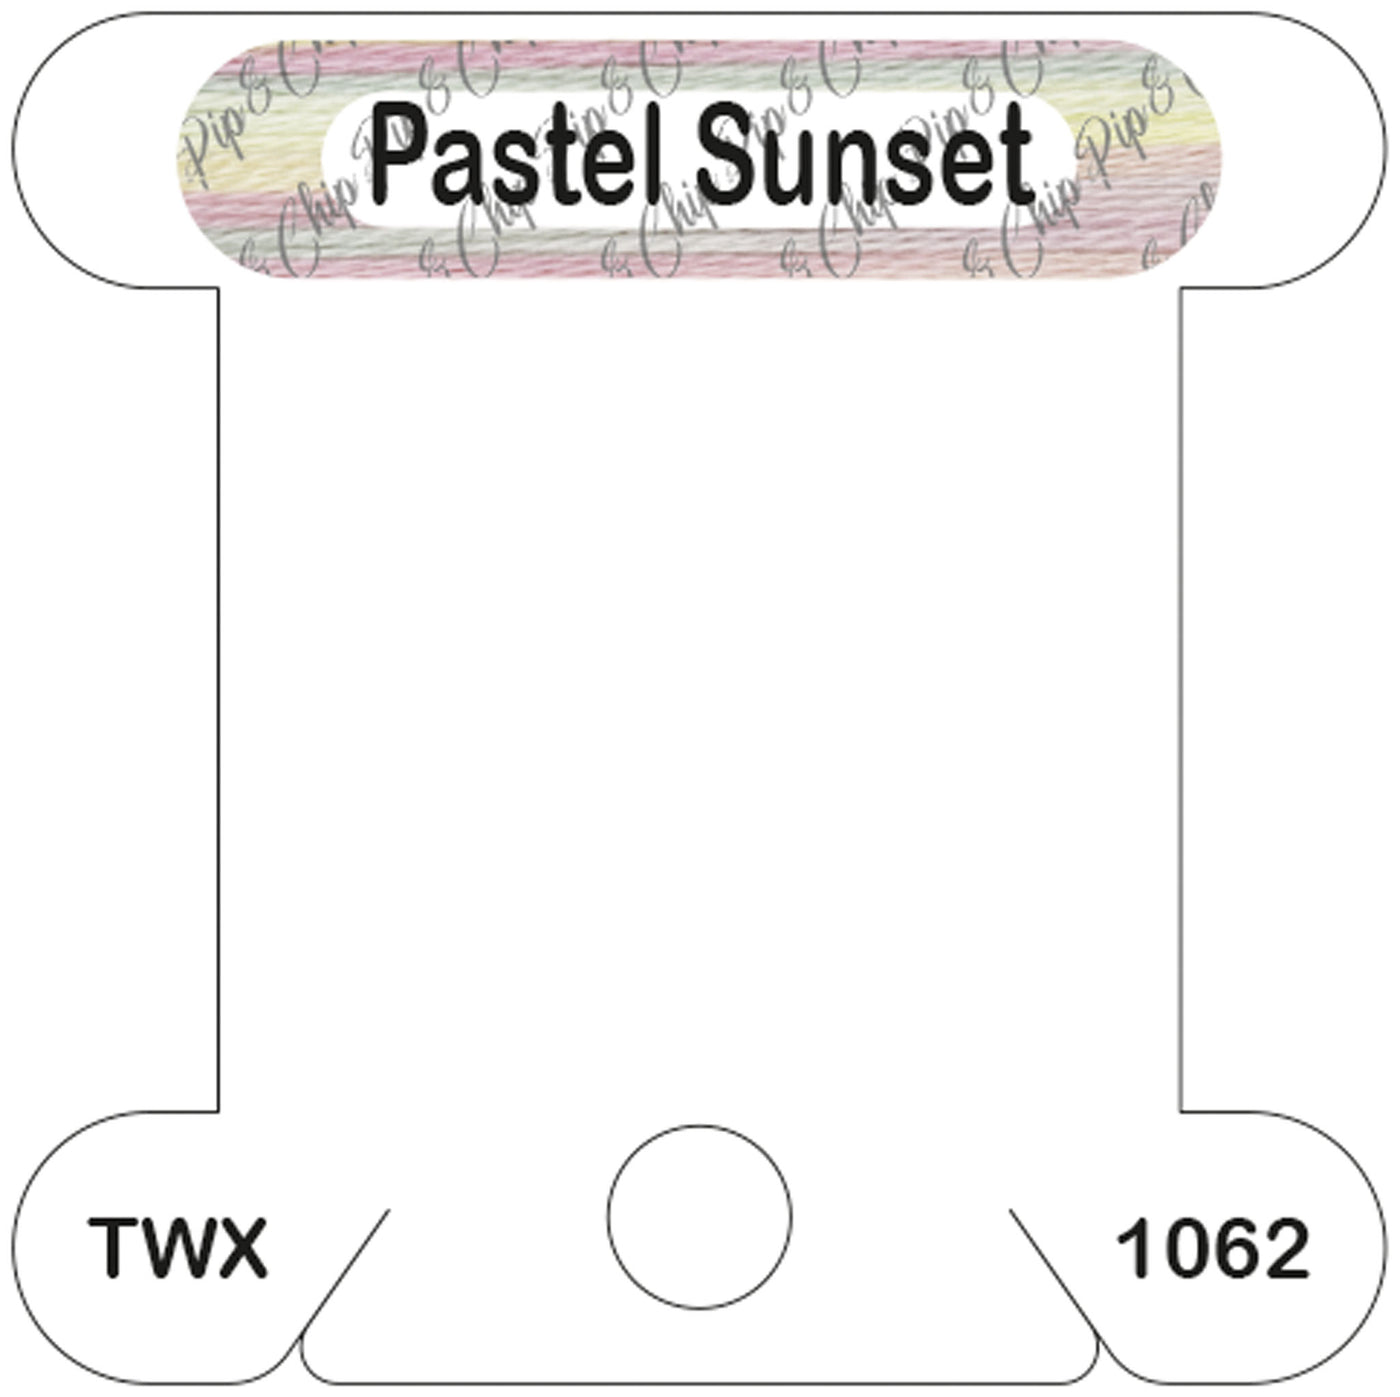 ThreadworX Pastel Sunset acrylic bobbin